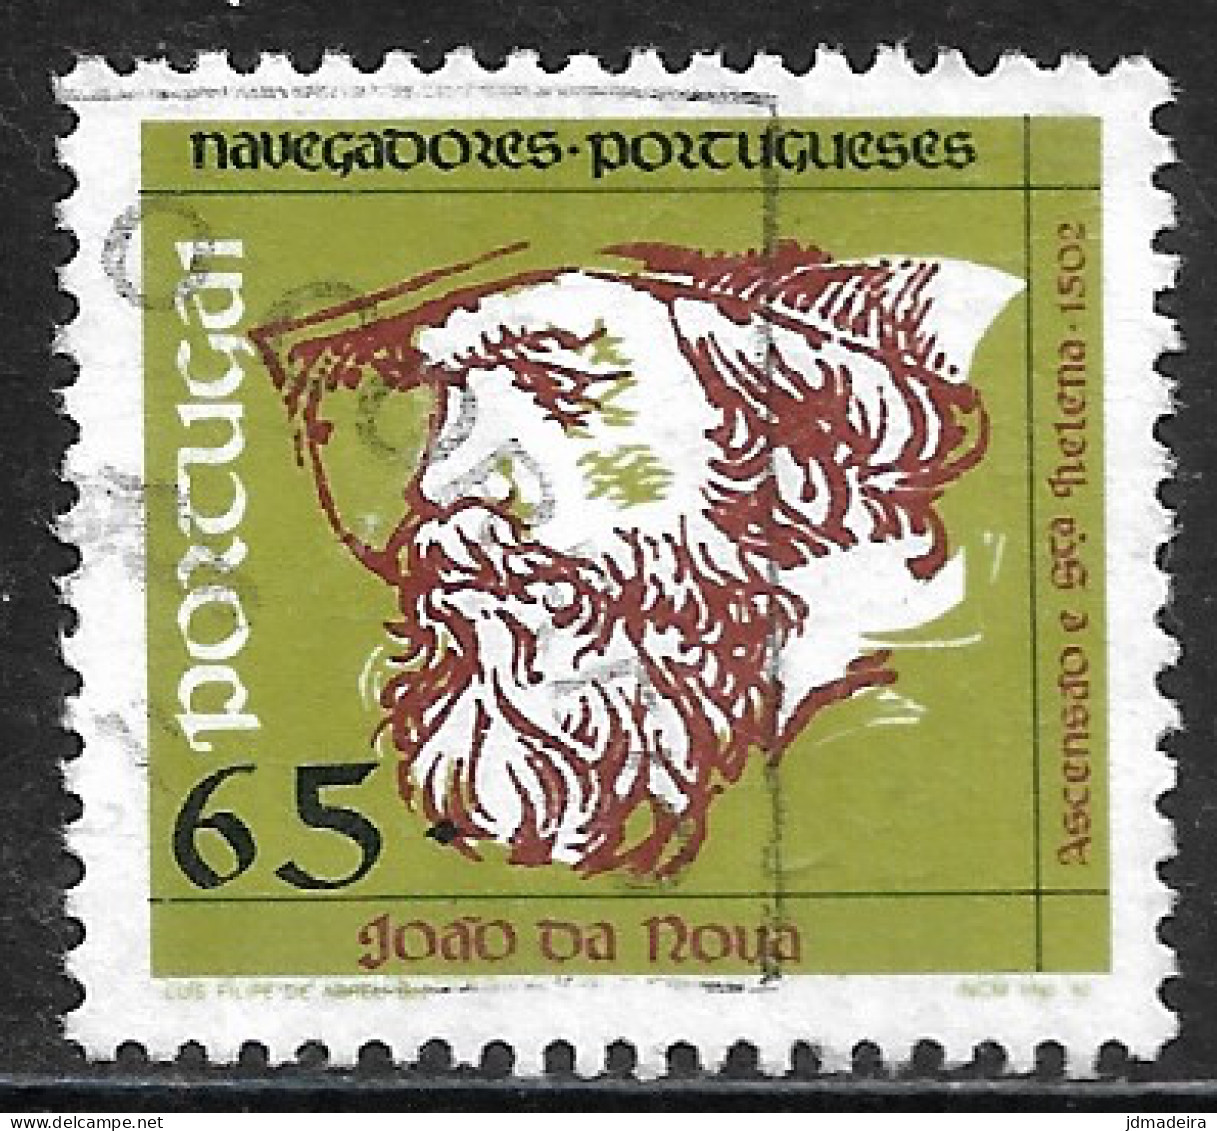 Portugal – 1992 Portuguese Navigators 65. Used Stamp - Usado